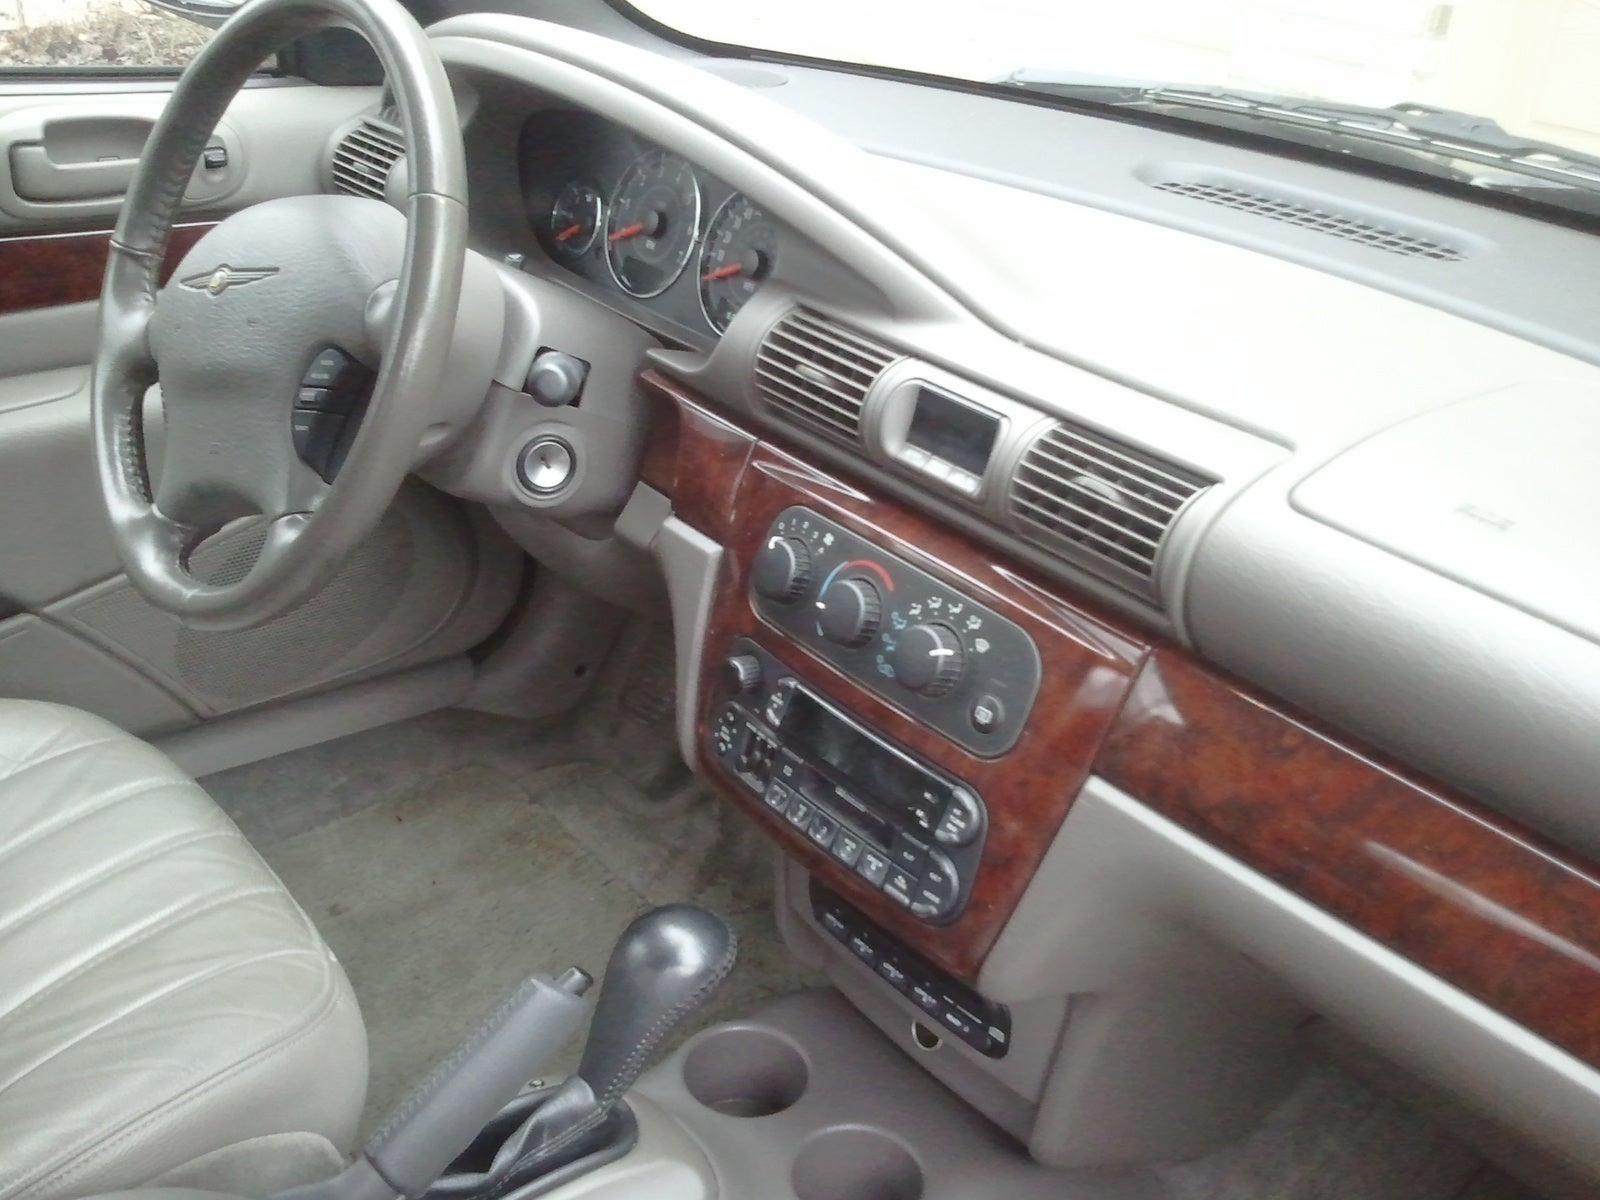 2002 Chrysler sebring interior colors